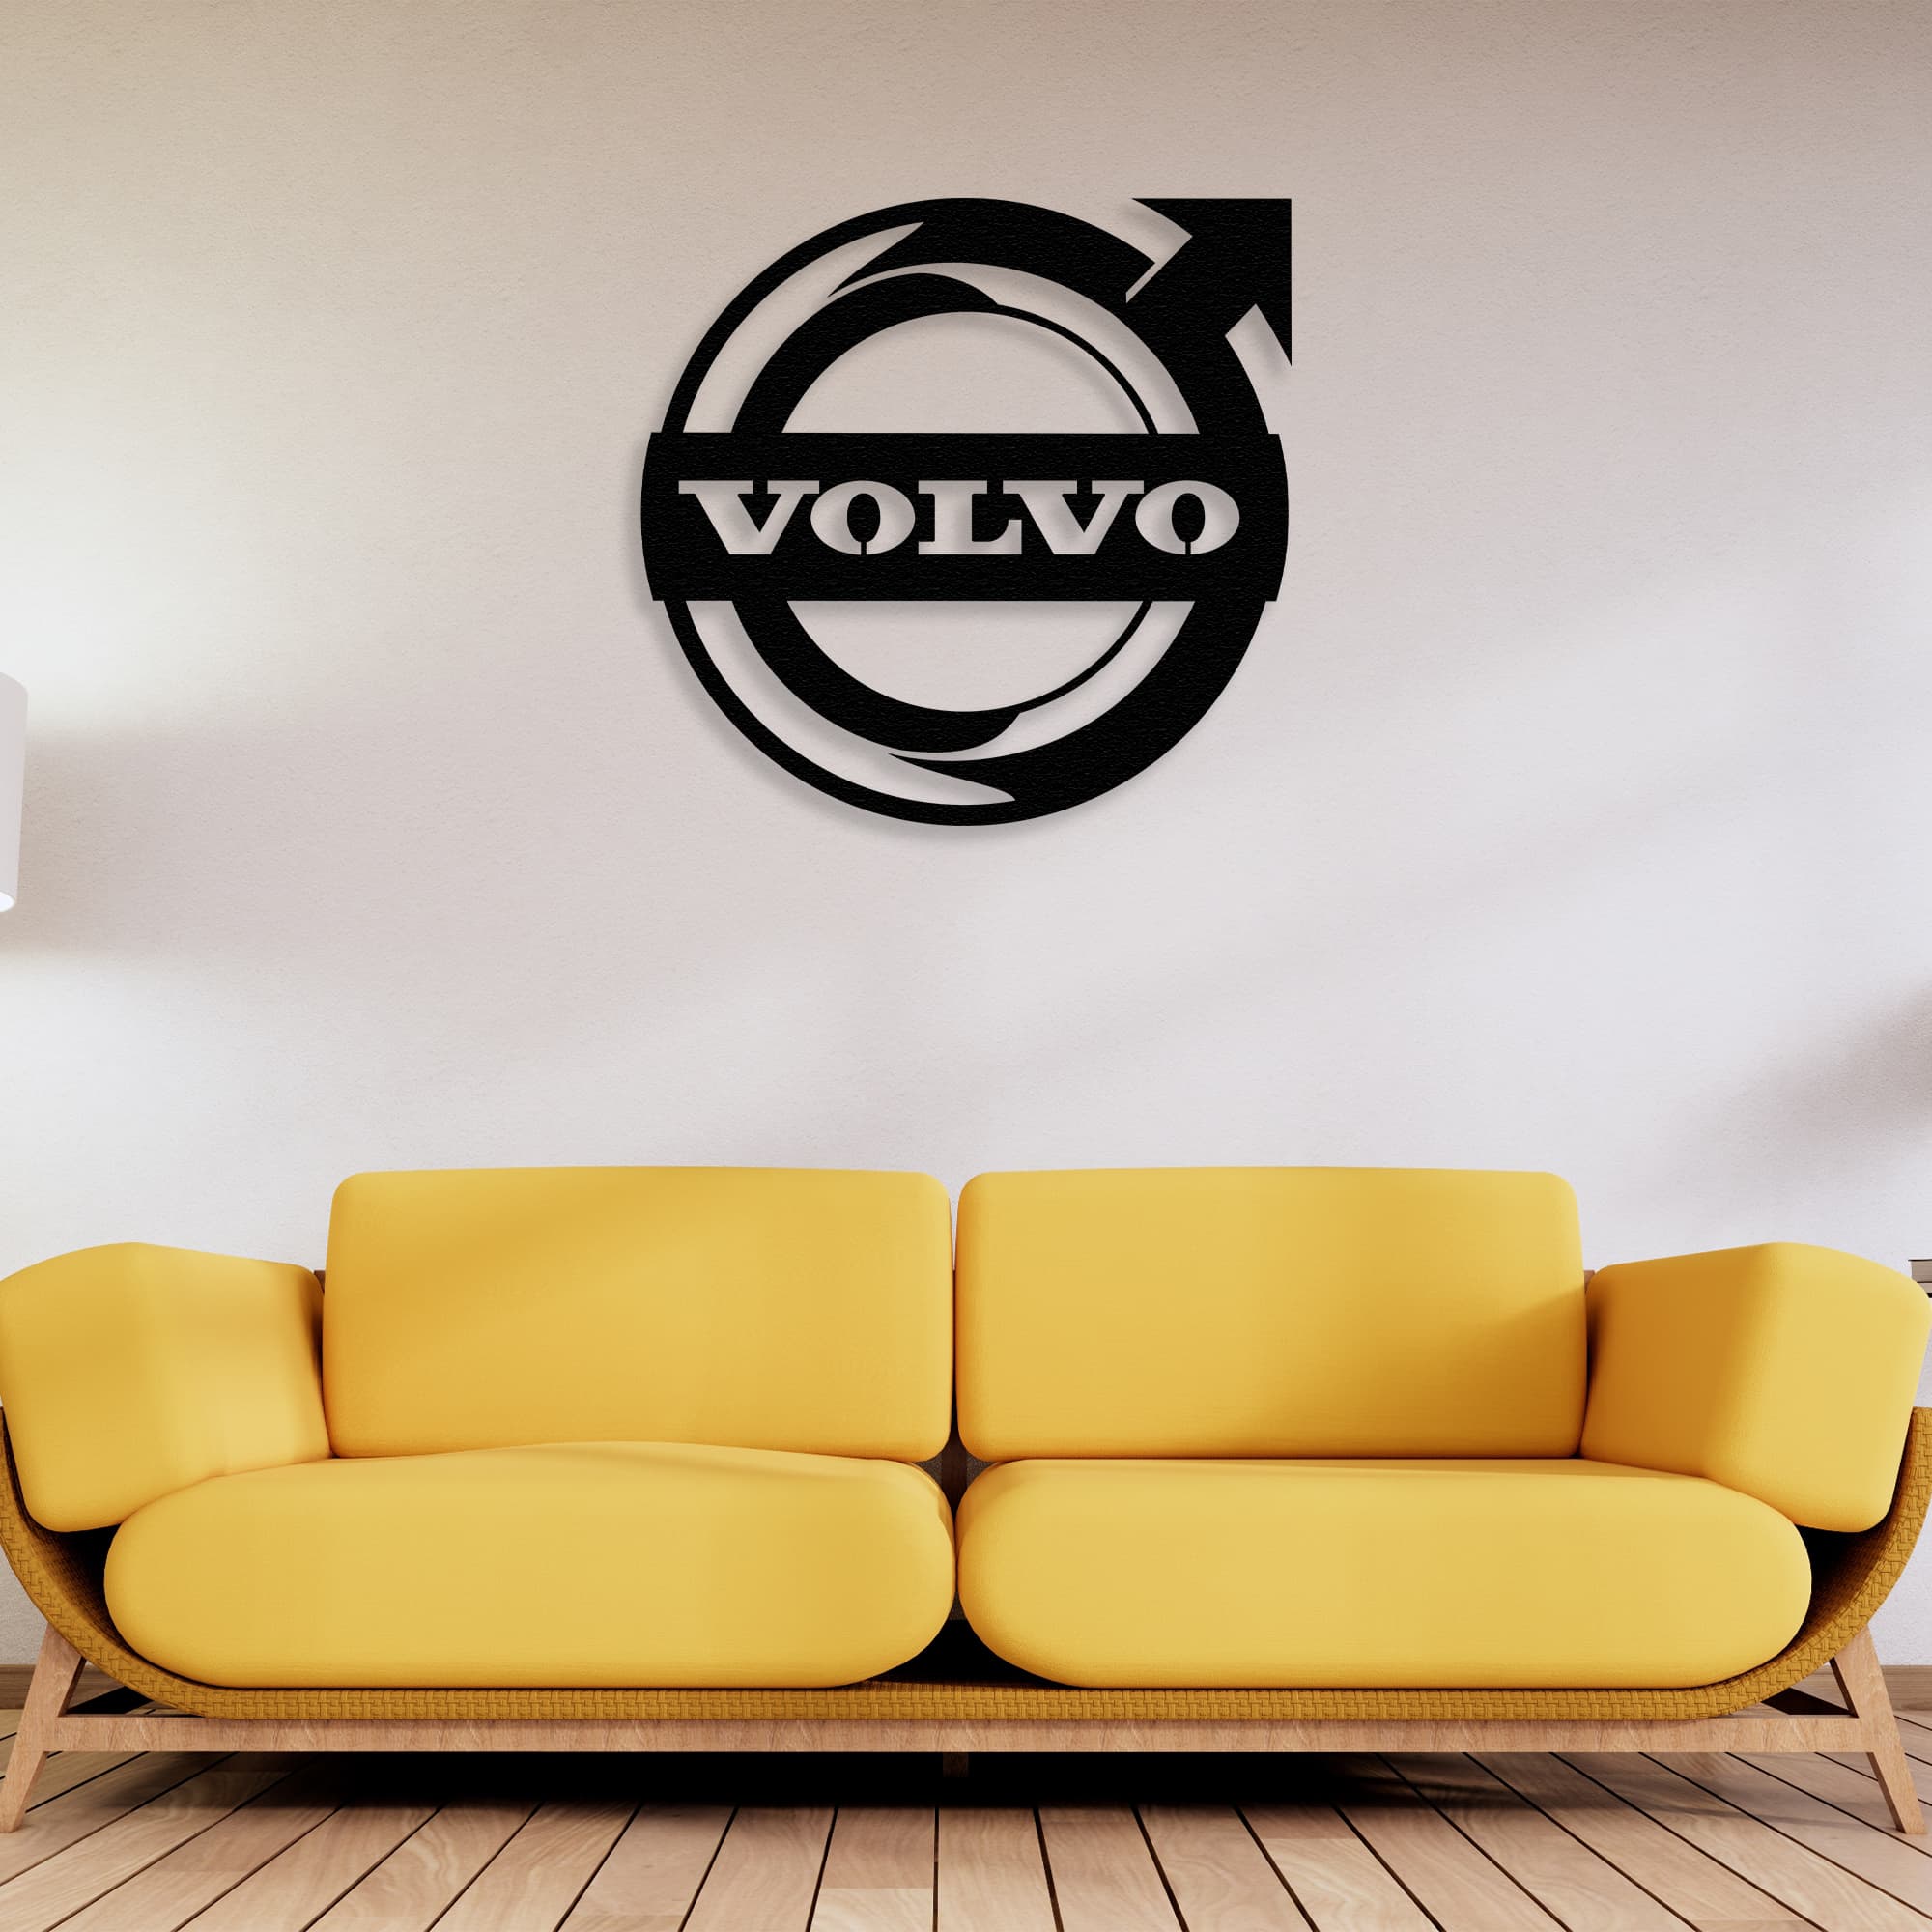 volvo metal wall art decor with yellow